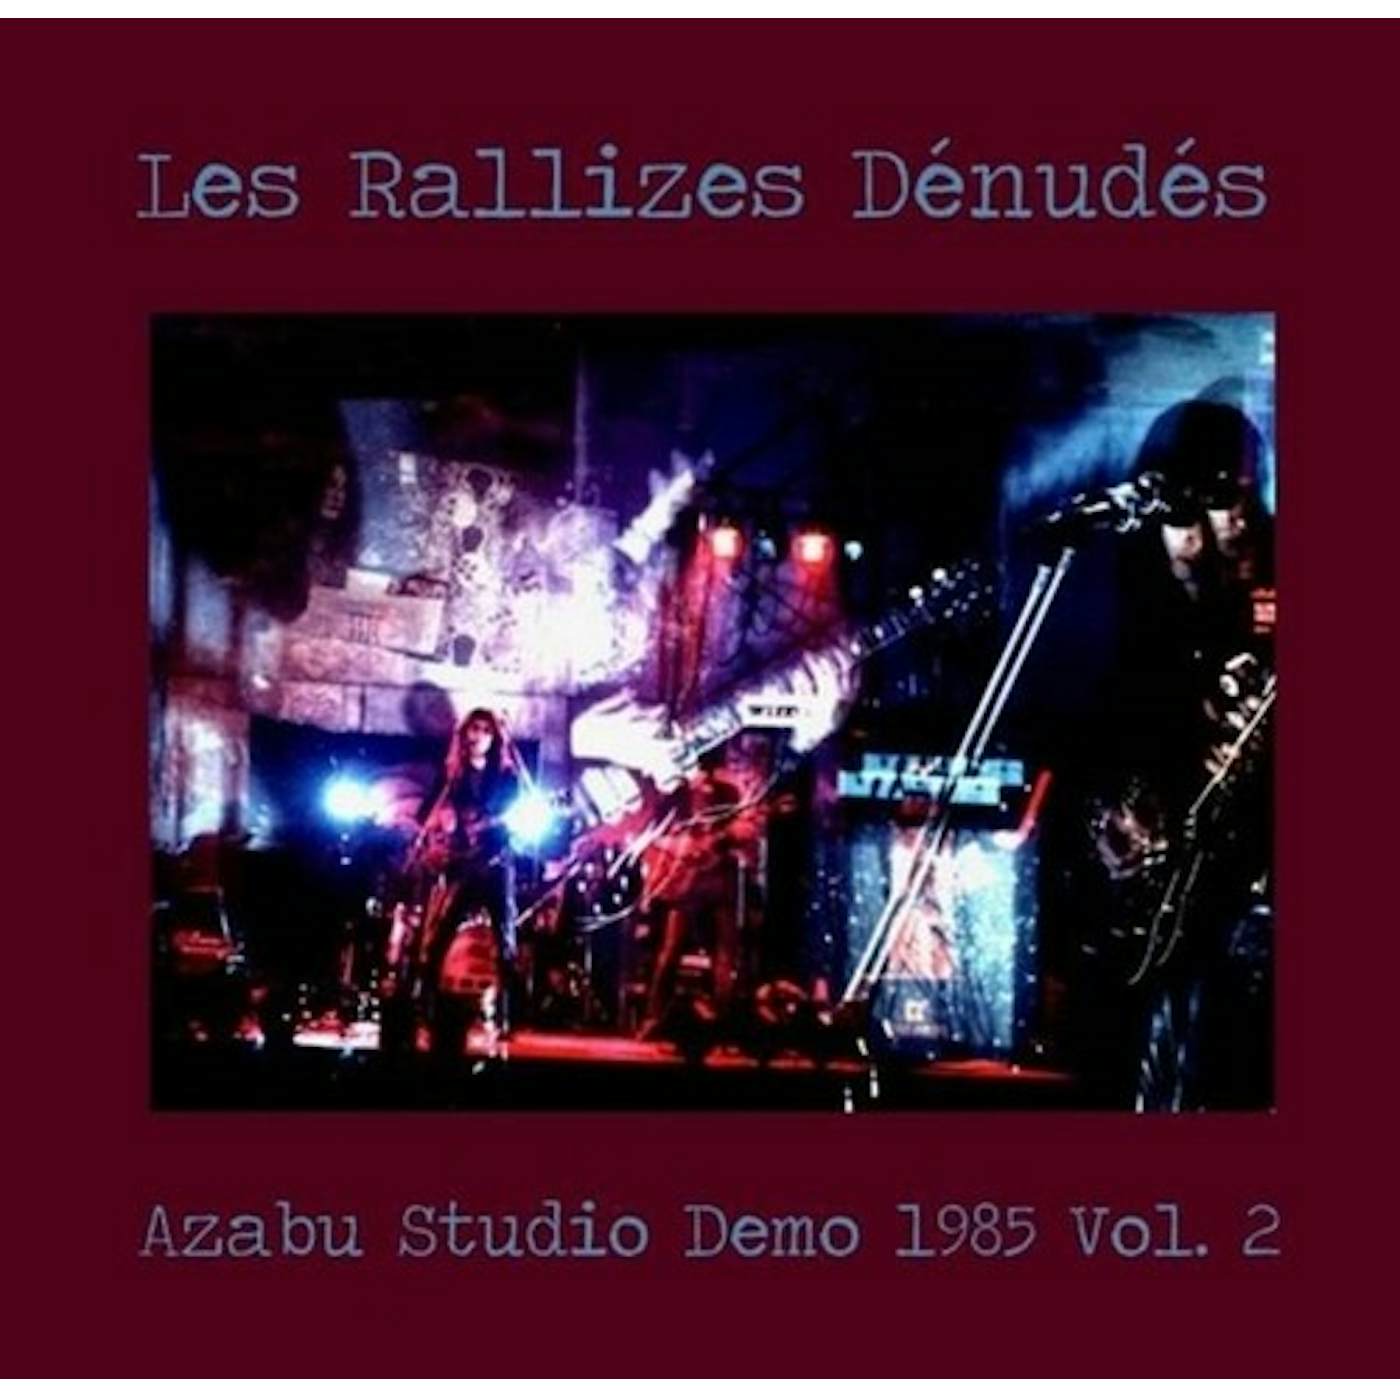 Les Rallizes Dénudés AZABU STUDIO DEMO 1985 VOL 2 Vinyl Record